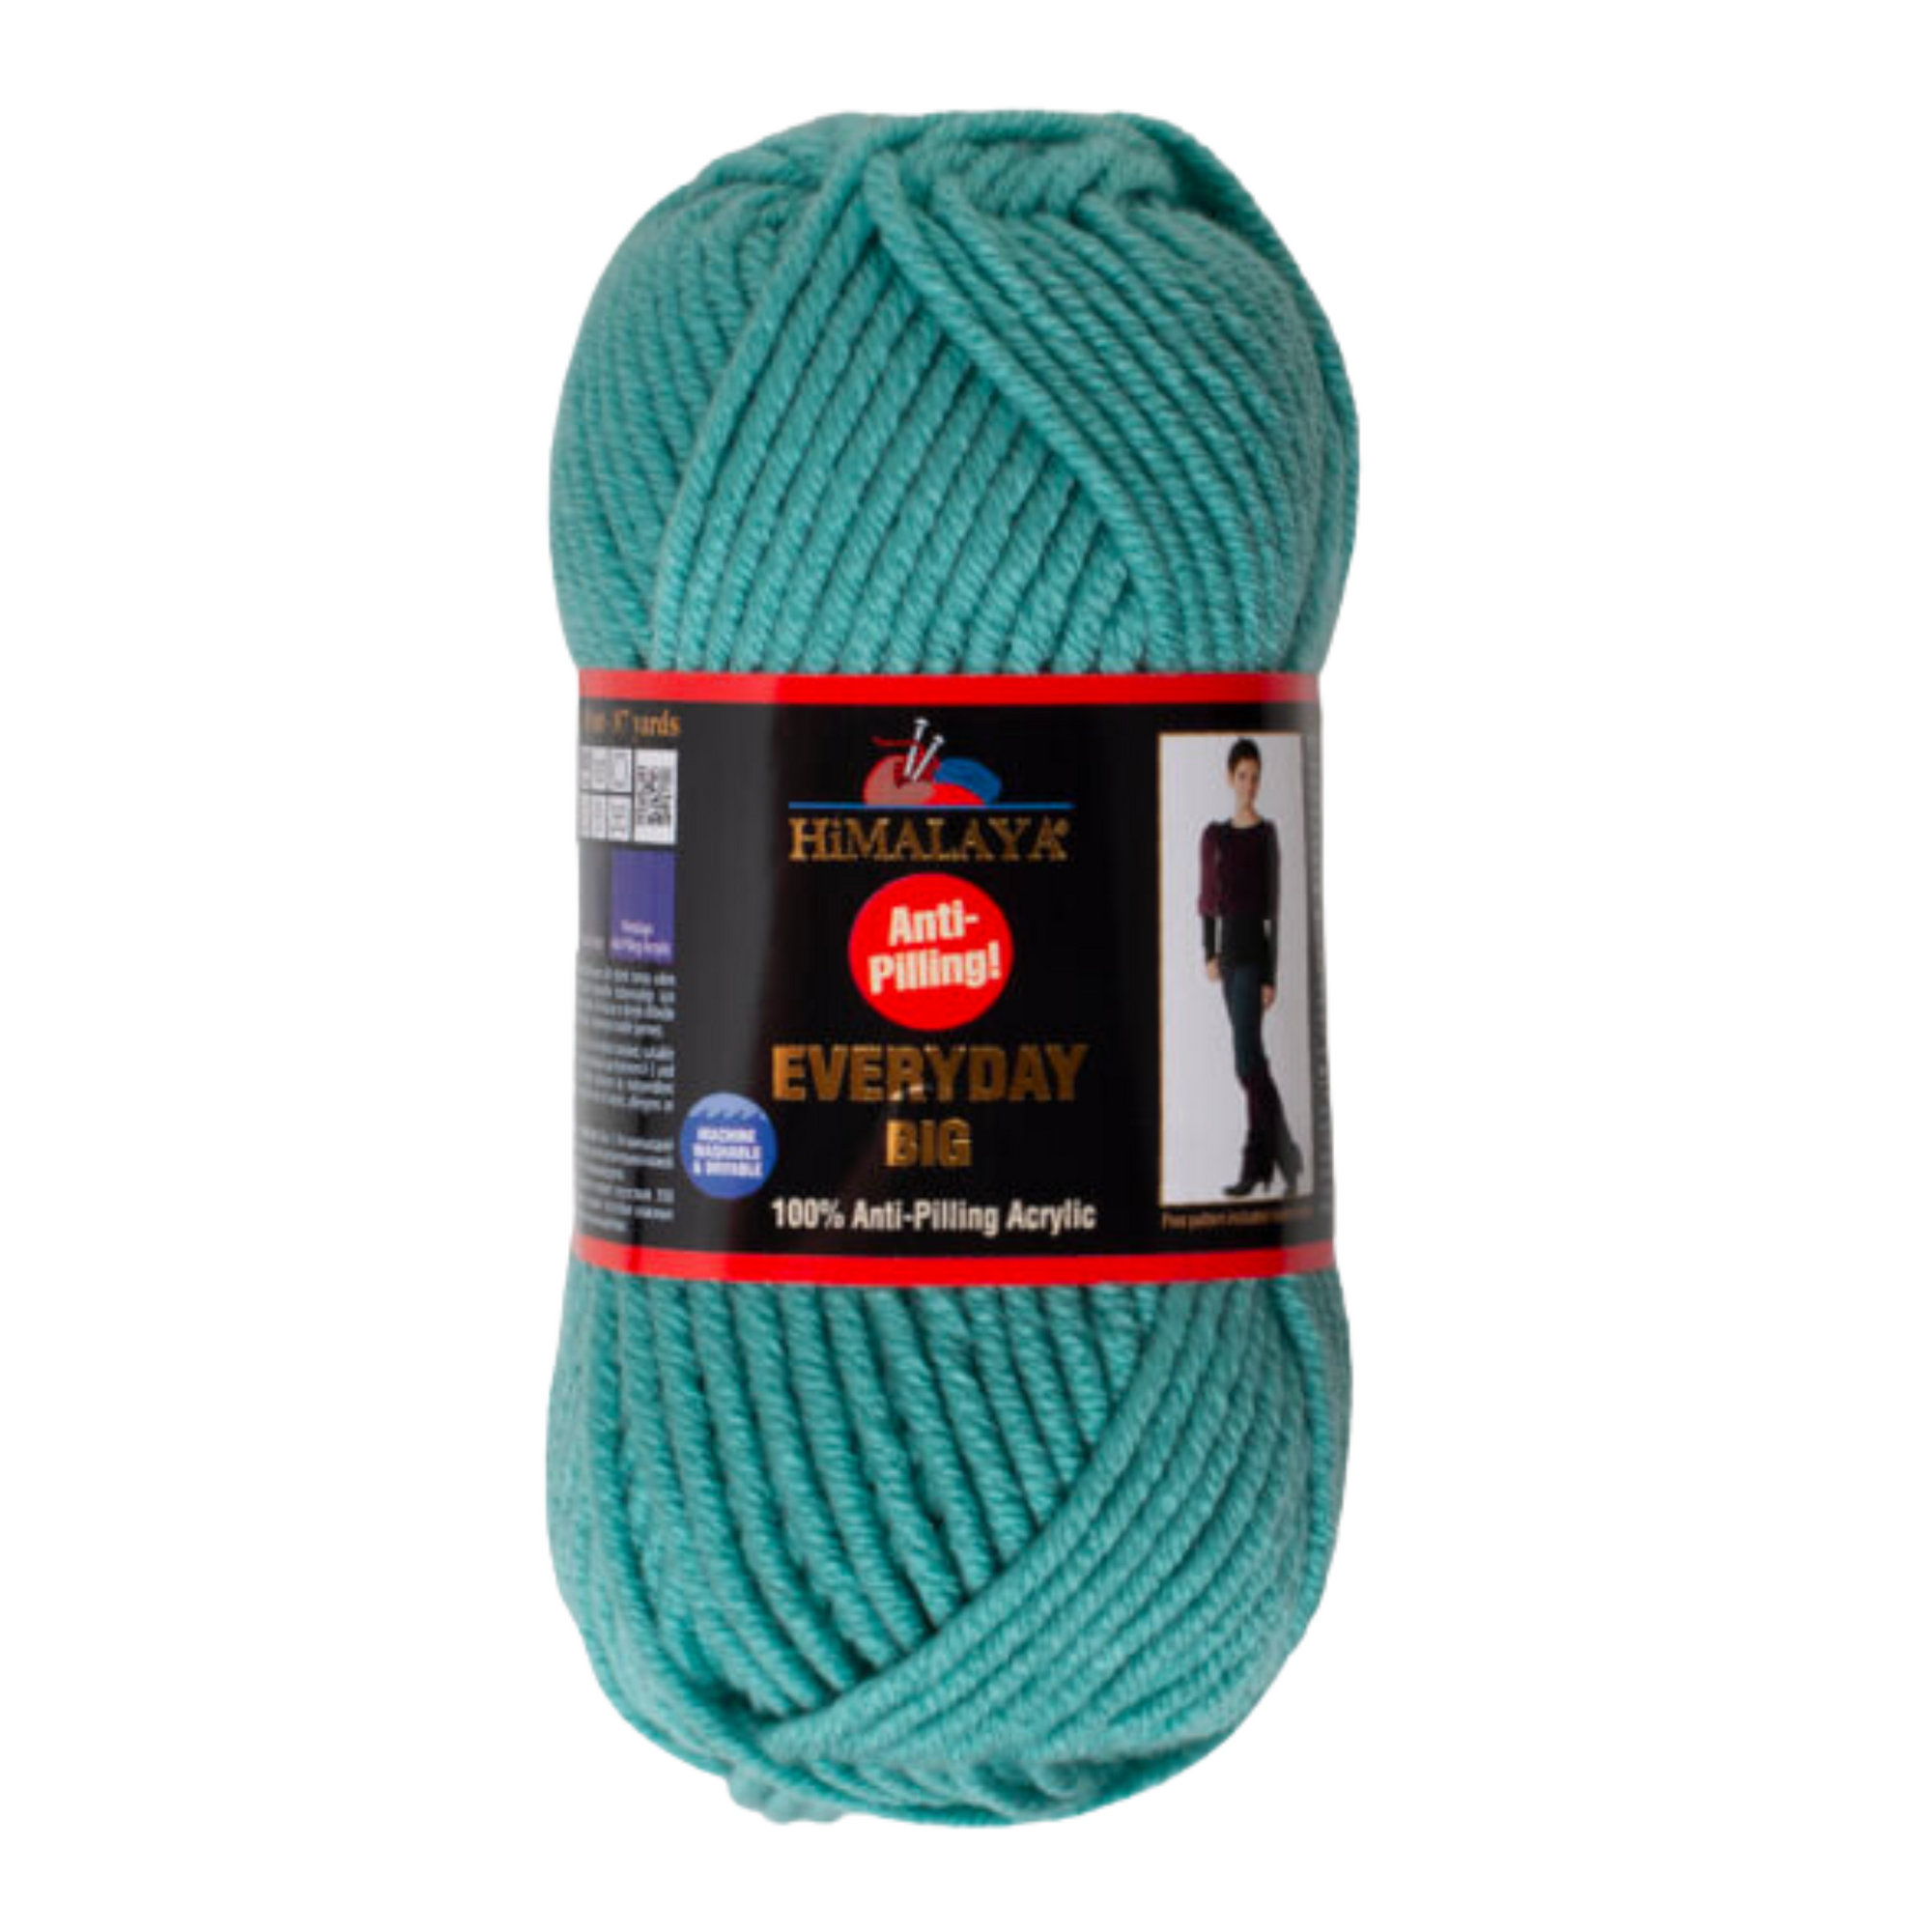 Himalaya Everyday 100% Anti-Pilling Acrylic Yarn, White - 70801